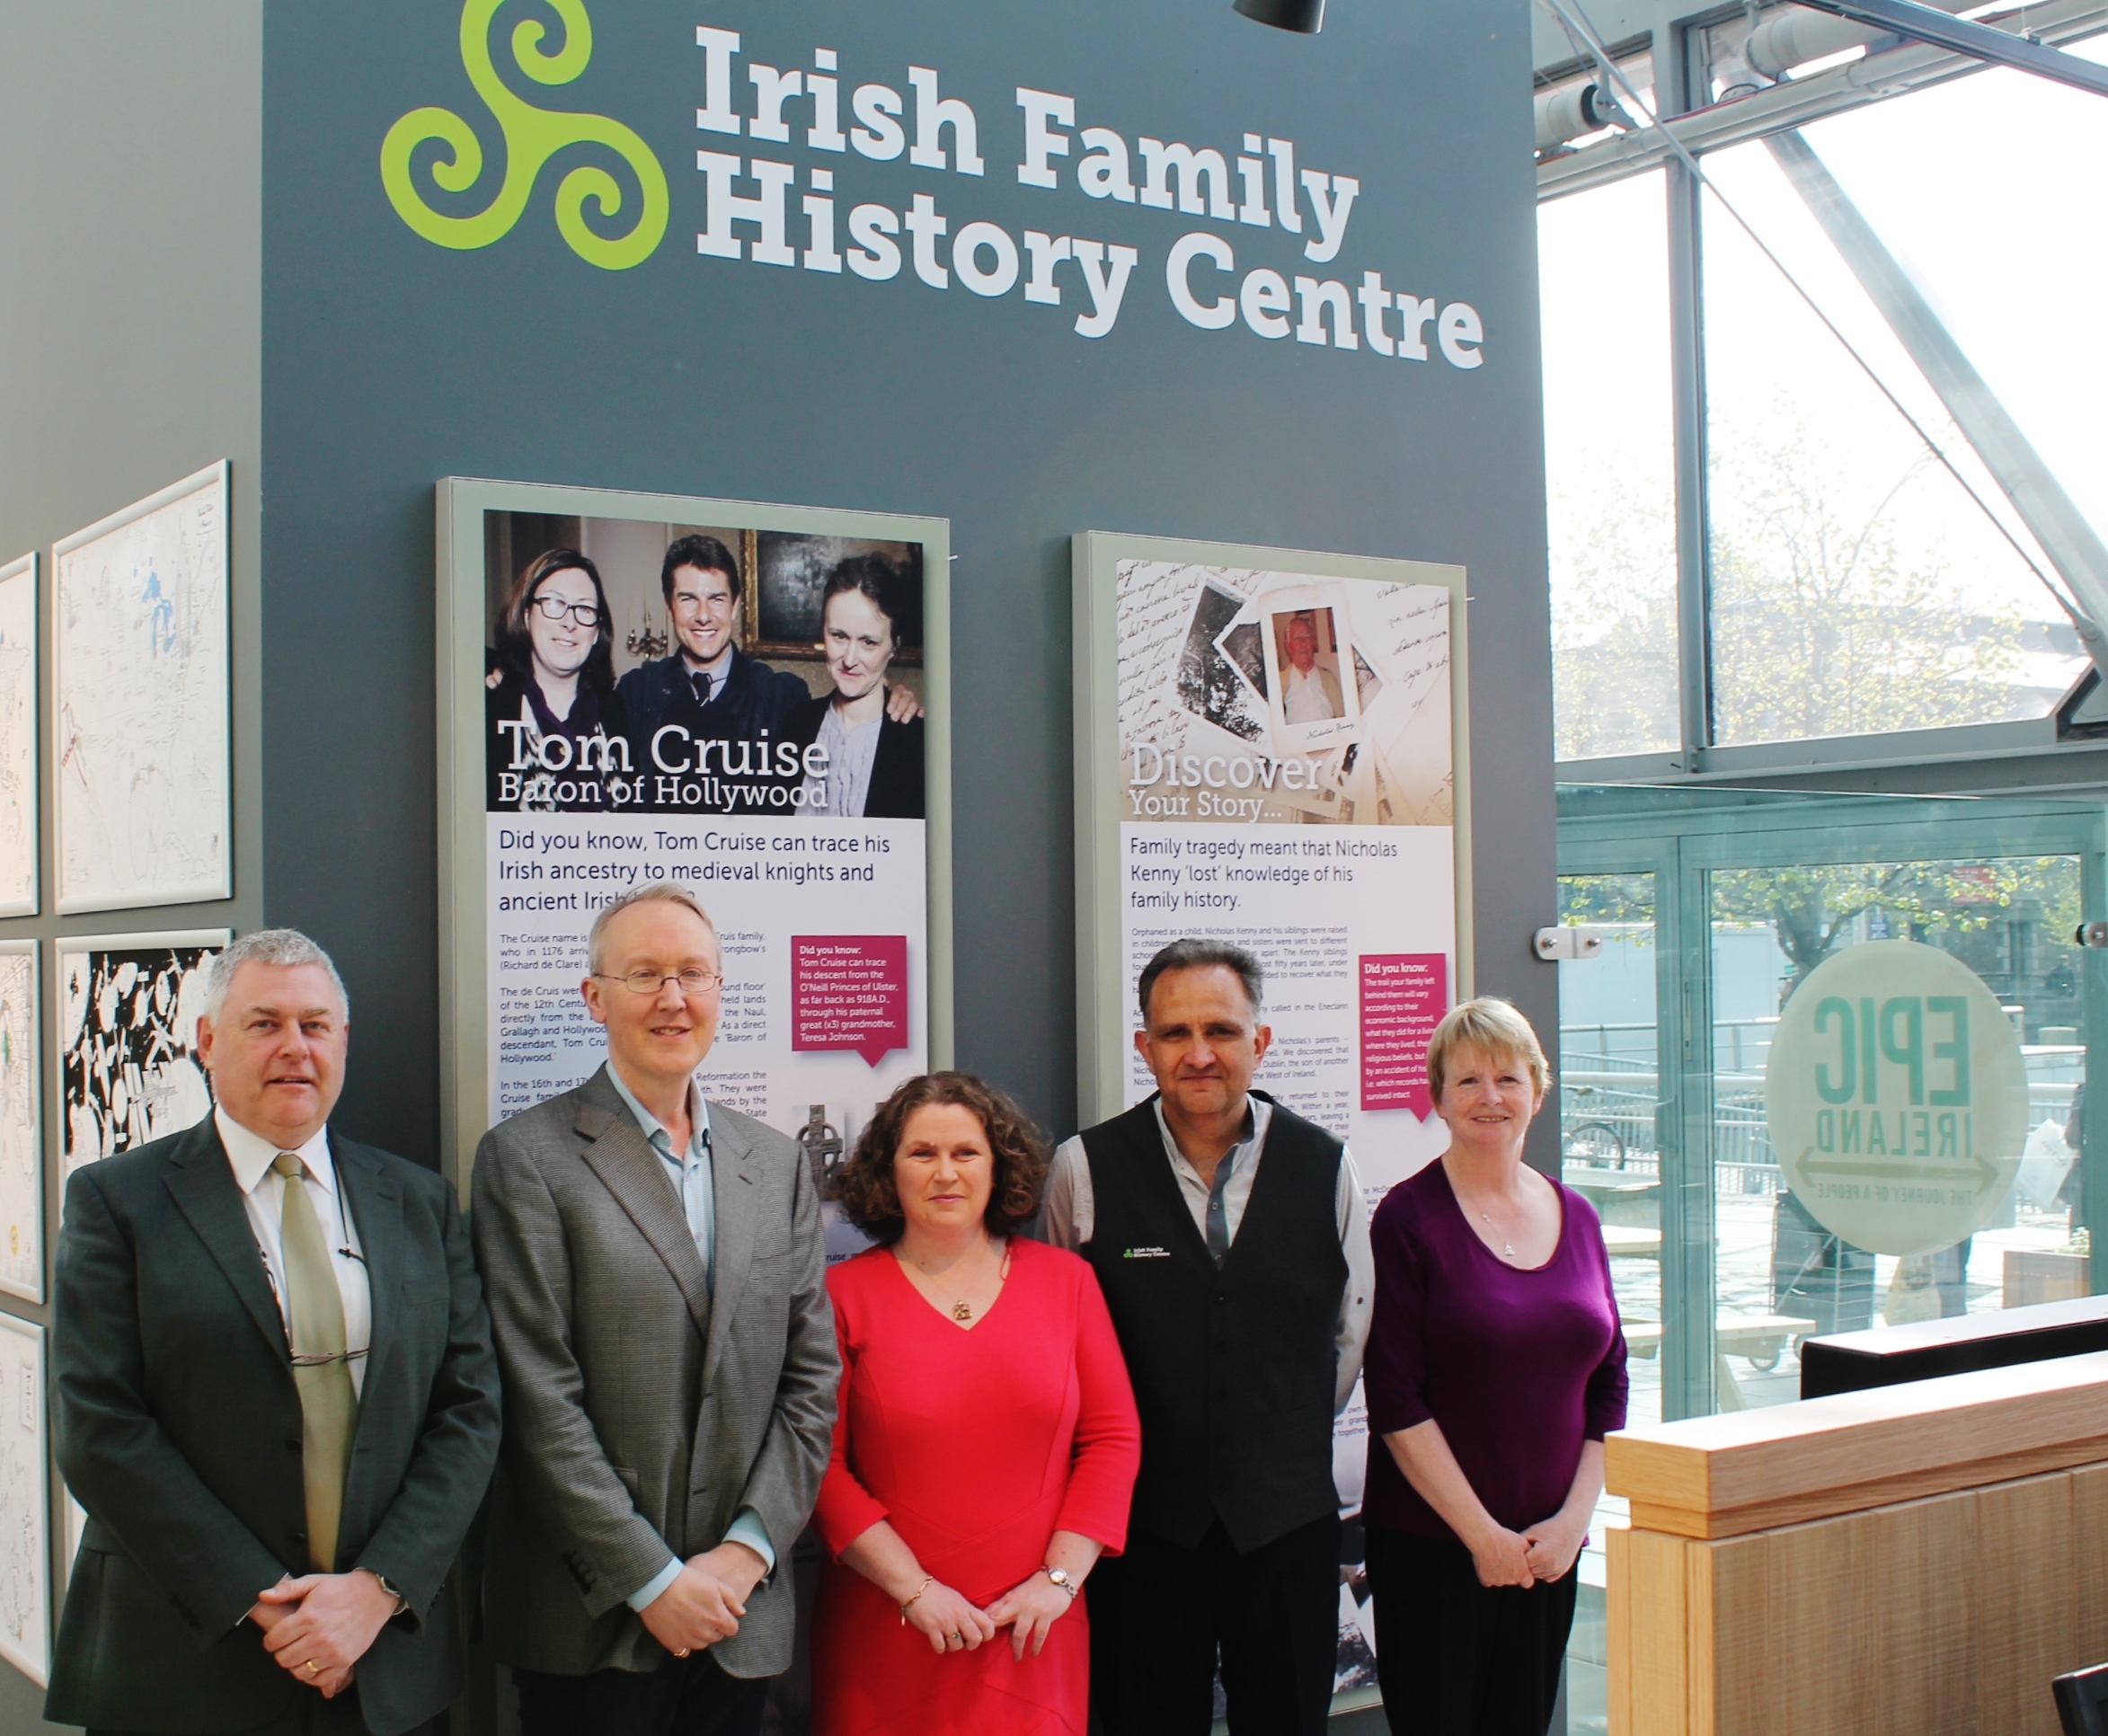 The Irish Family History Centre Visitor Experience